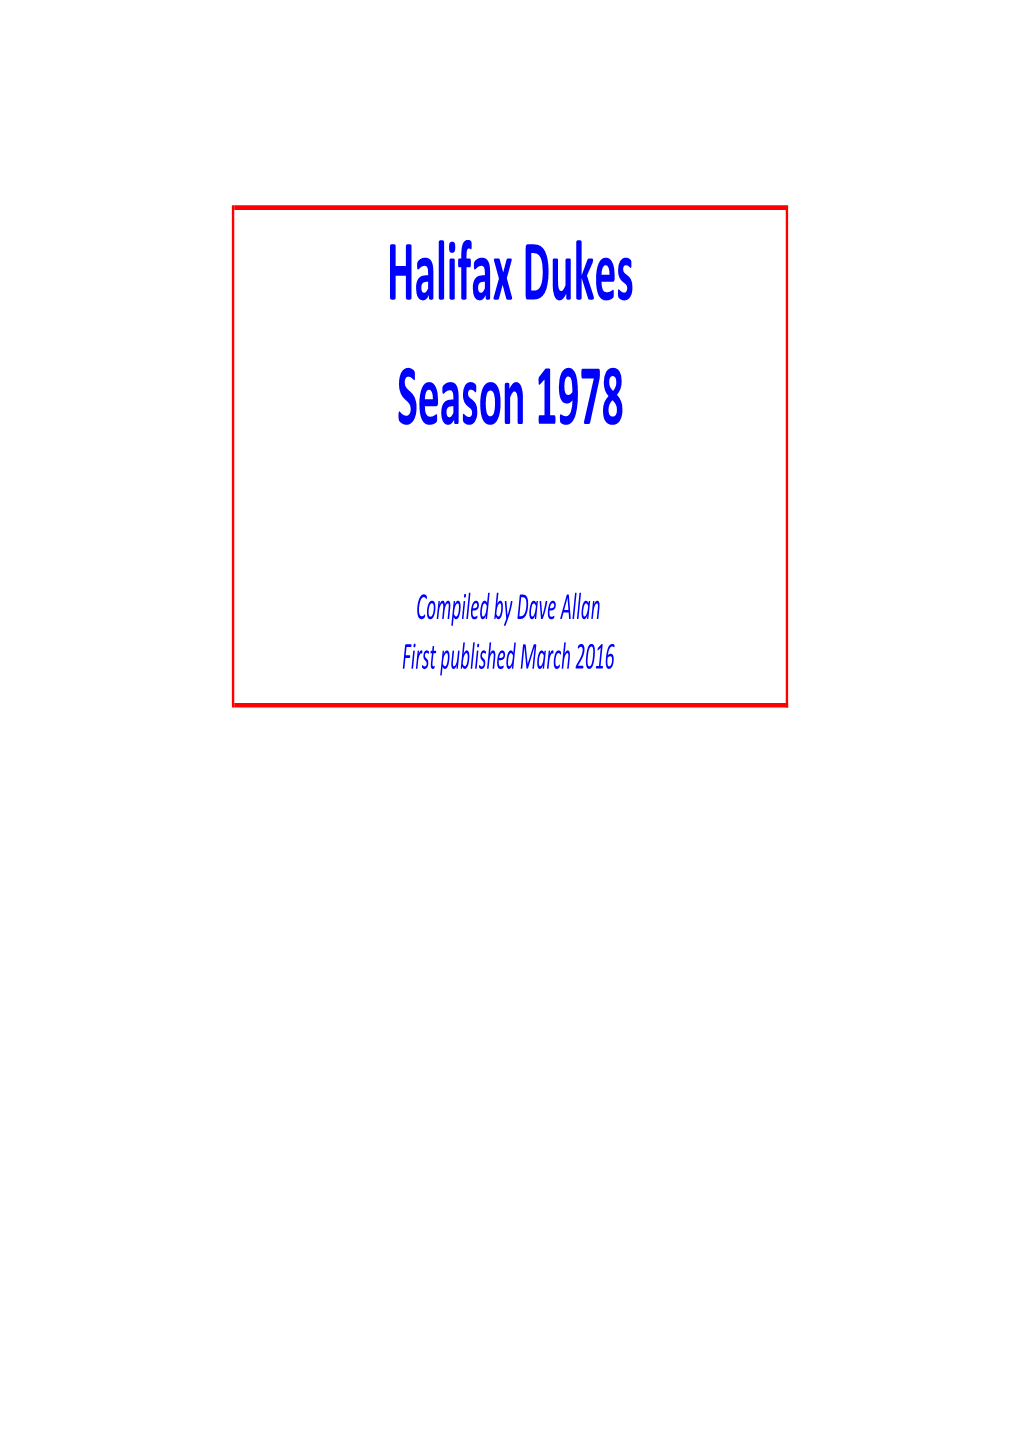 Halifax Dukes Season 1978